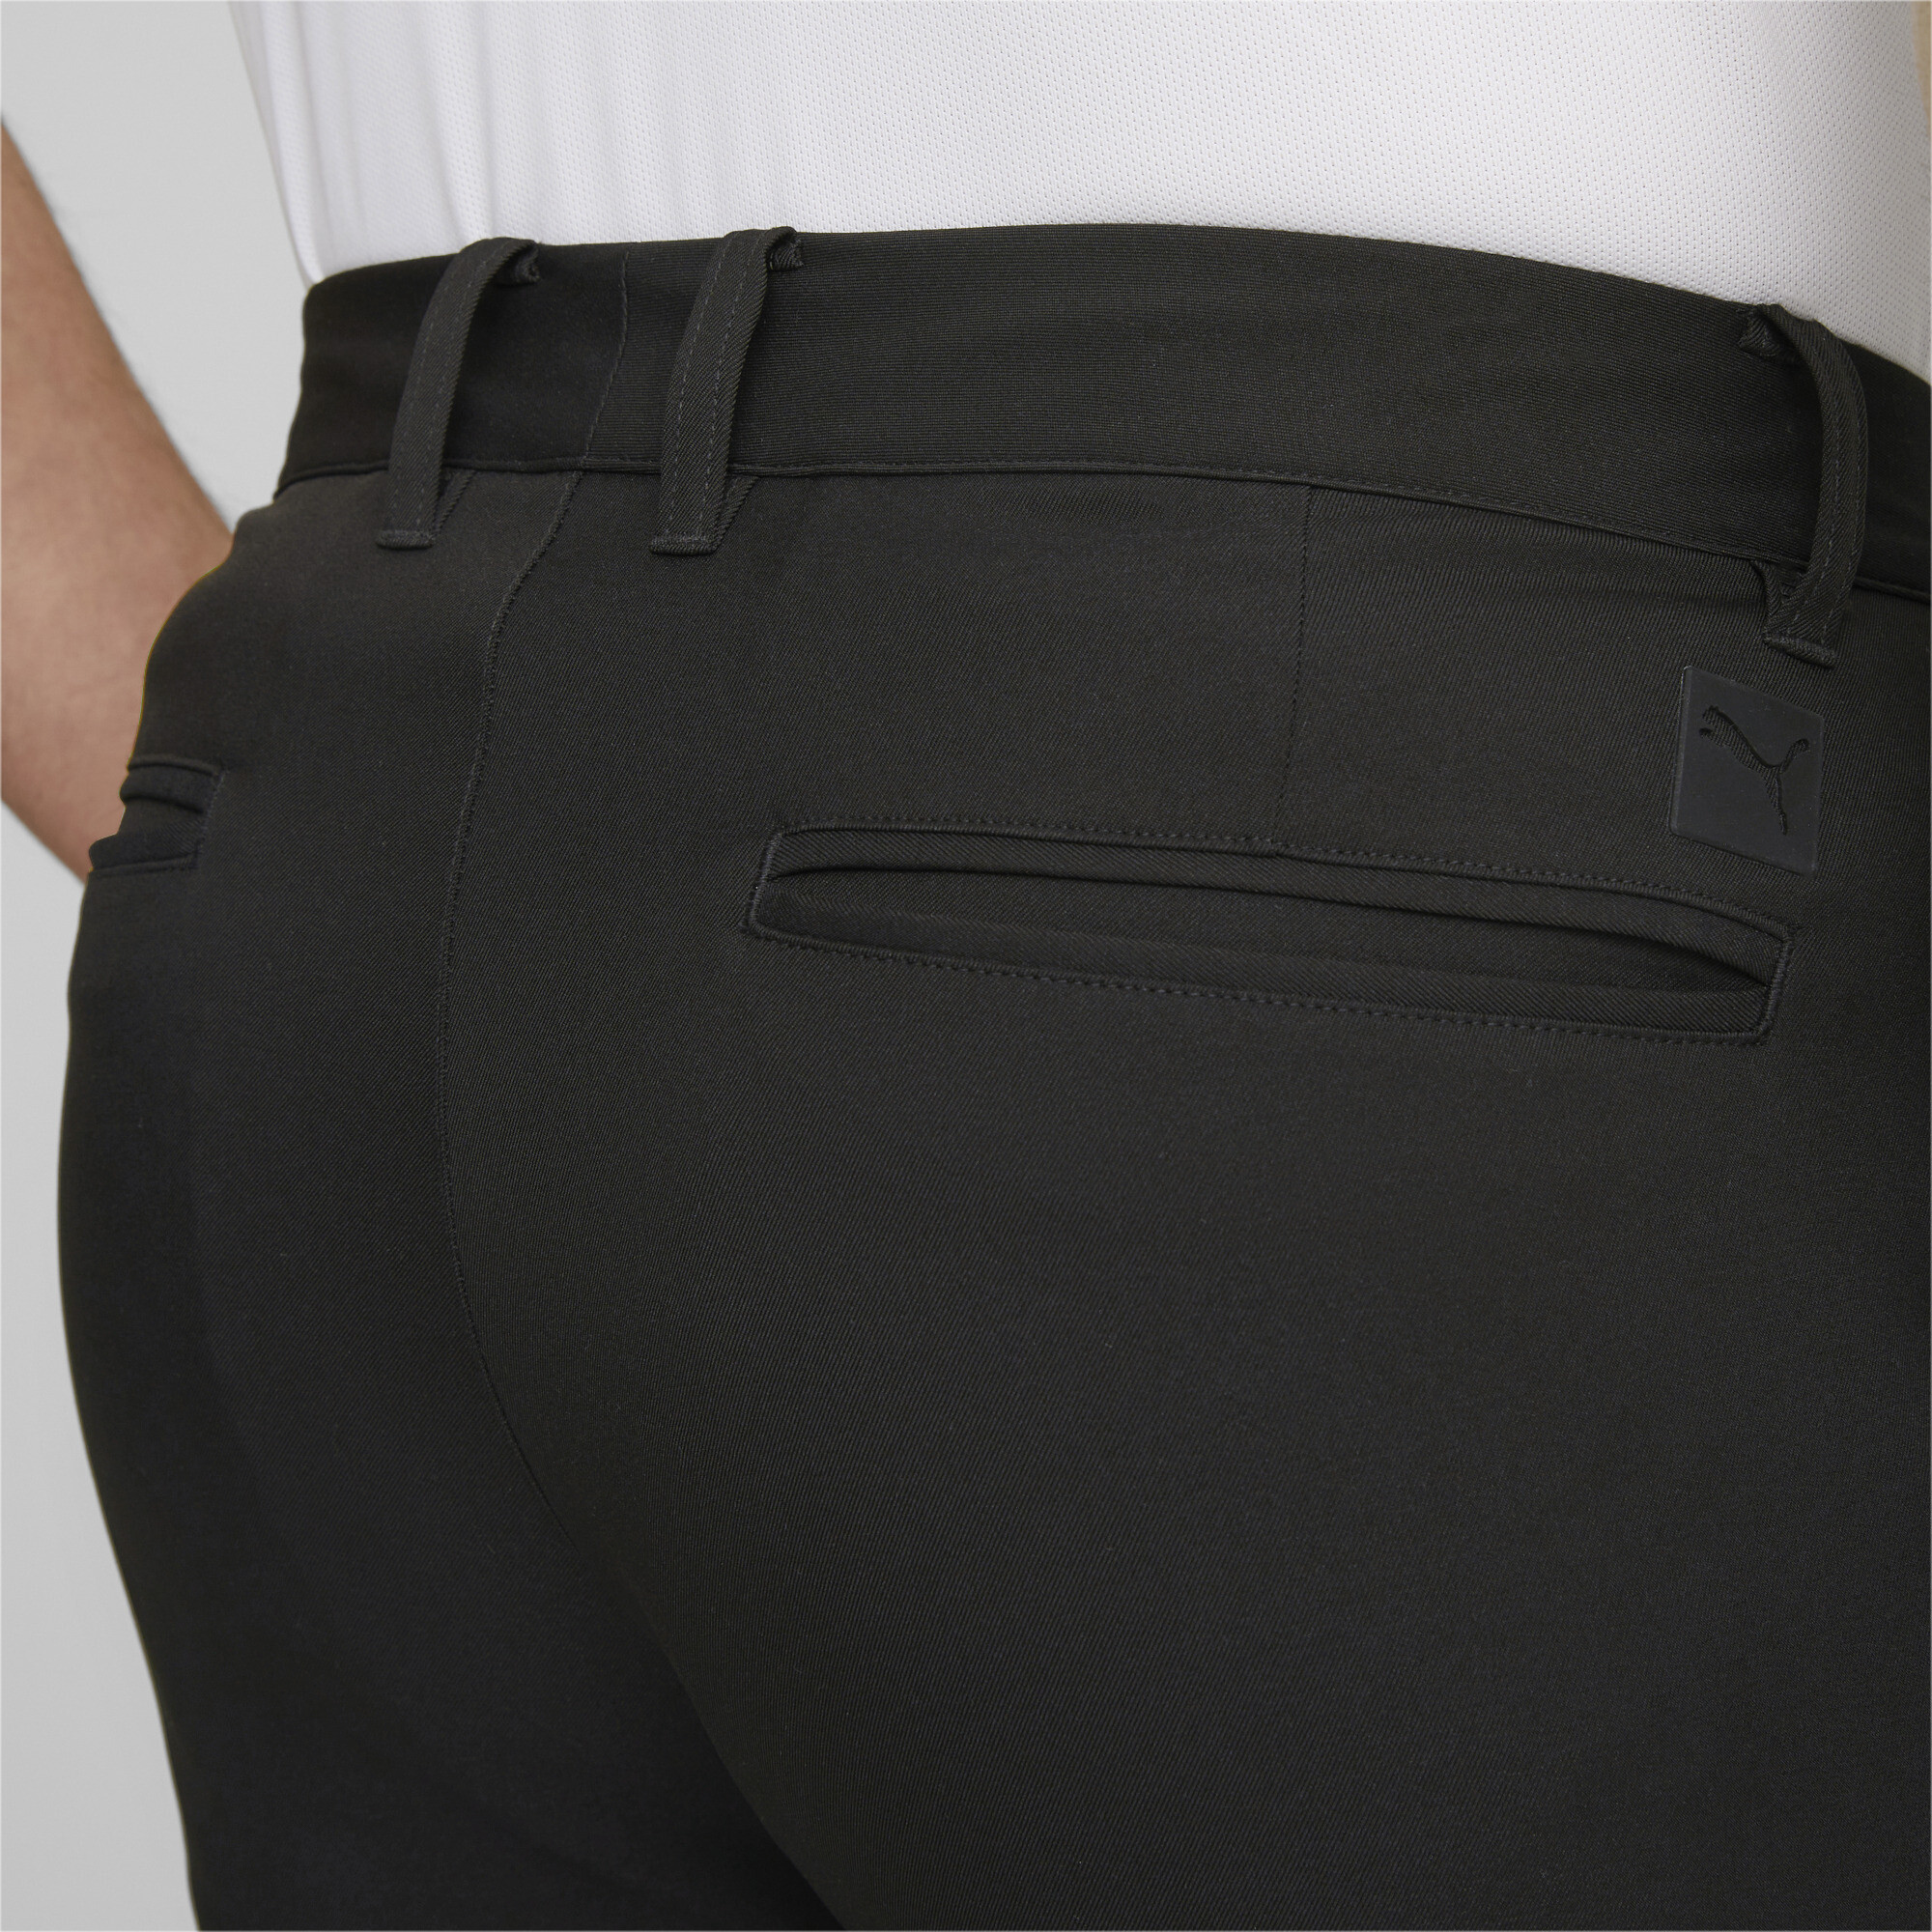 Men's Puma Dealer Golf Pants, Black, Size 33/32, Clothing